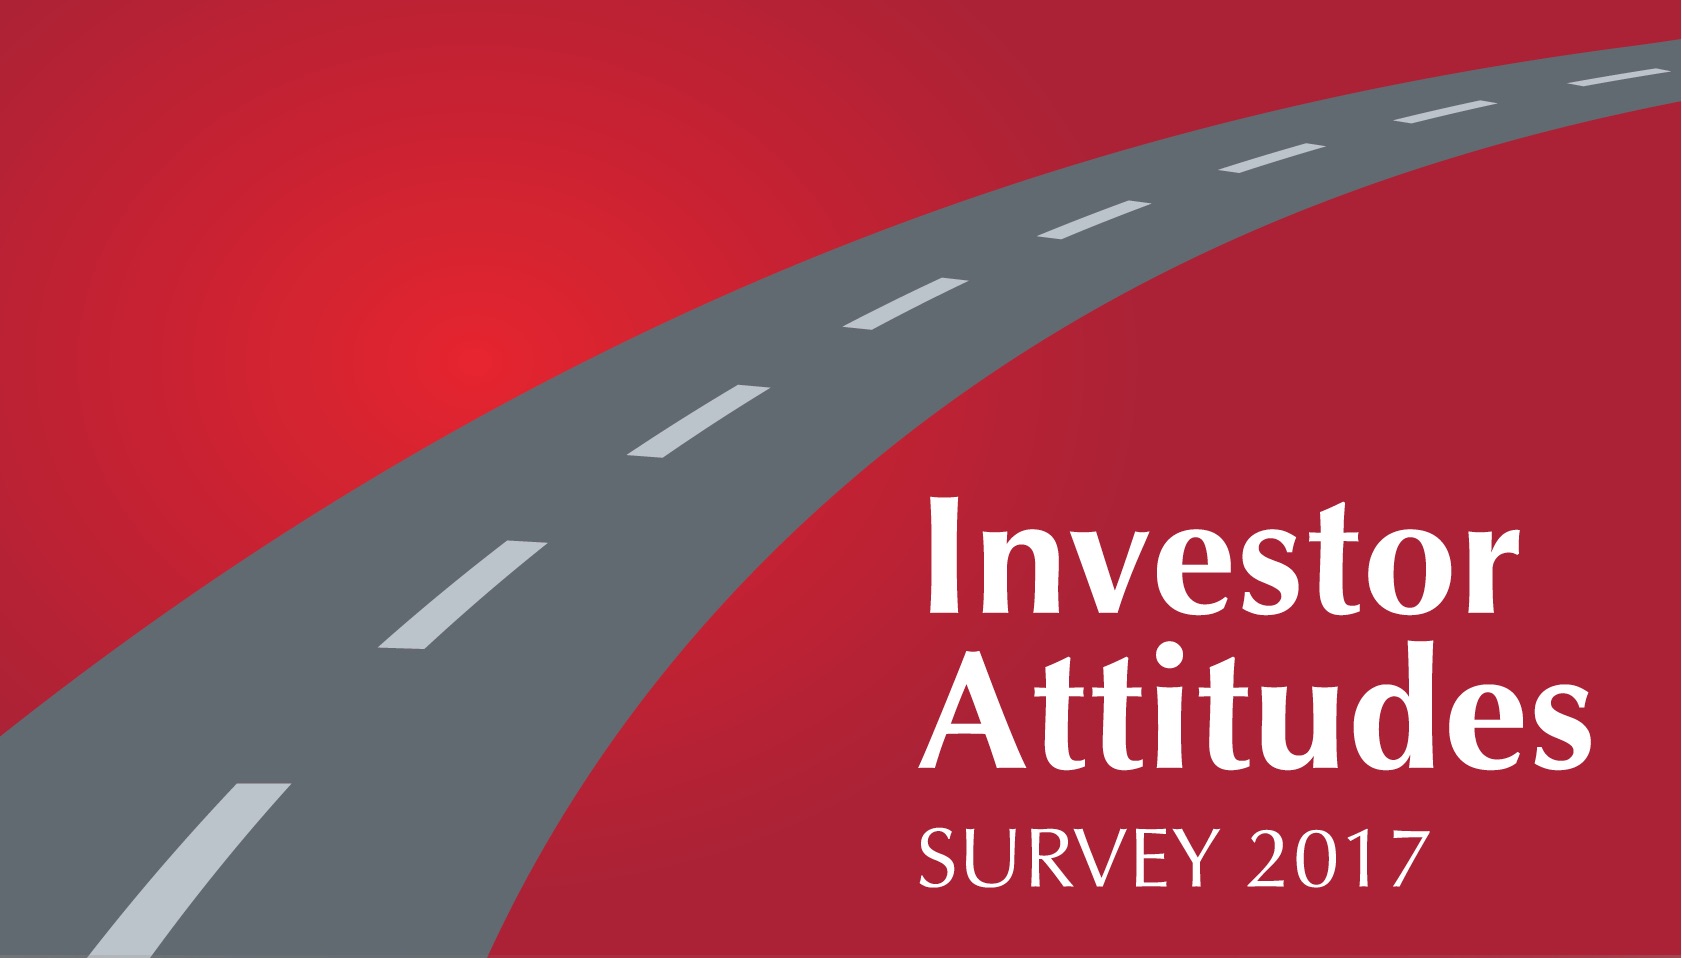 Investor Attitudes Survey 2017 Intro Image